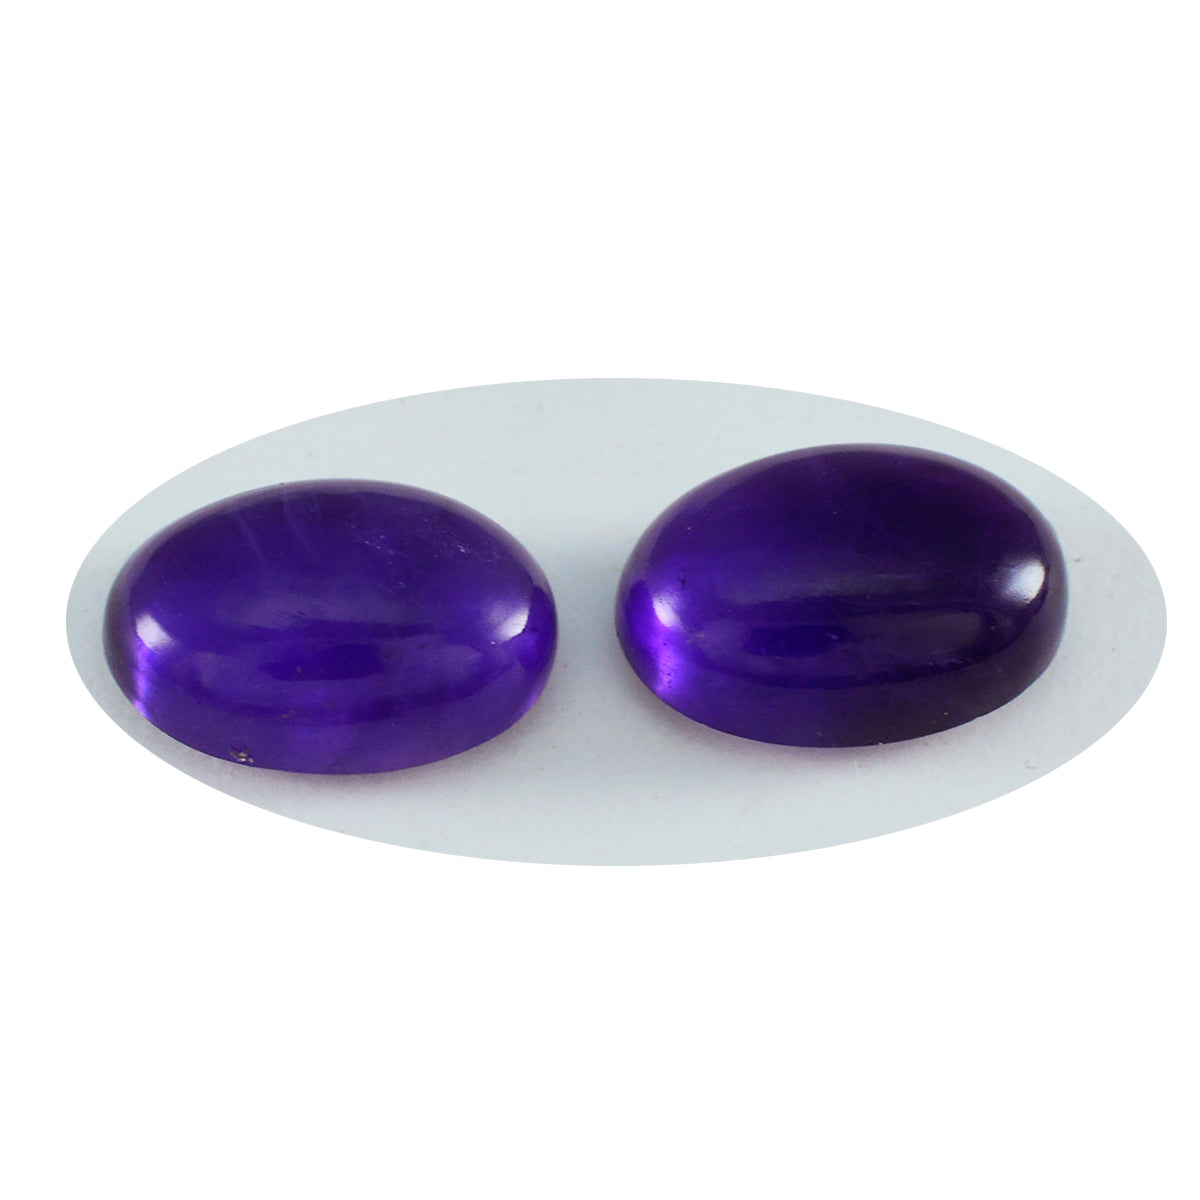 Riyogems 1 Stück lila Amethyst-Cabochon, 12 x 16 mm, ovale Form, hübscher Qualitäts-Edelstein